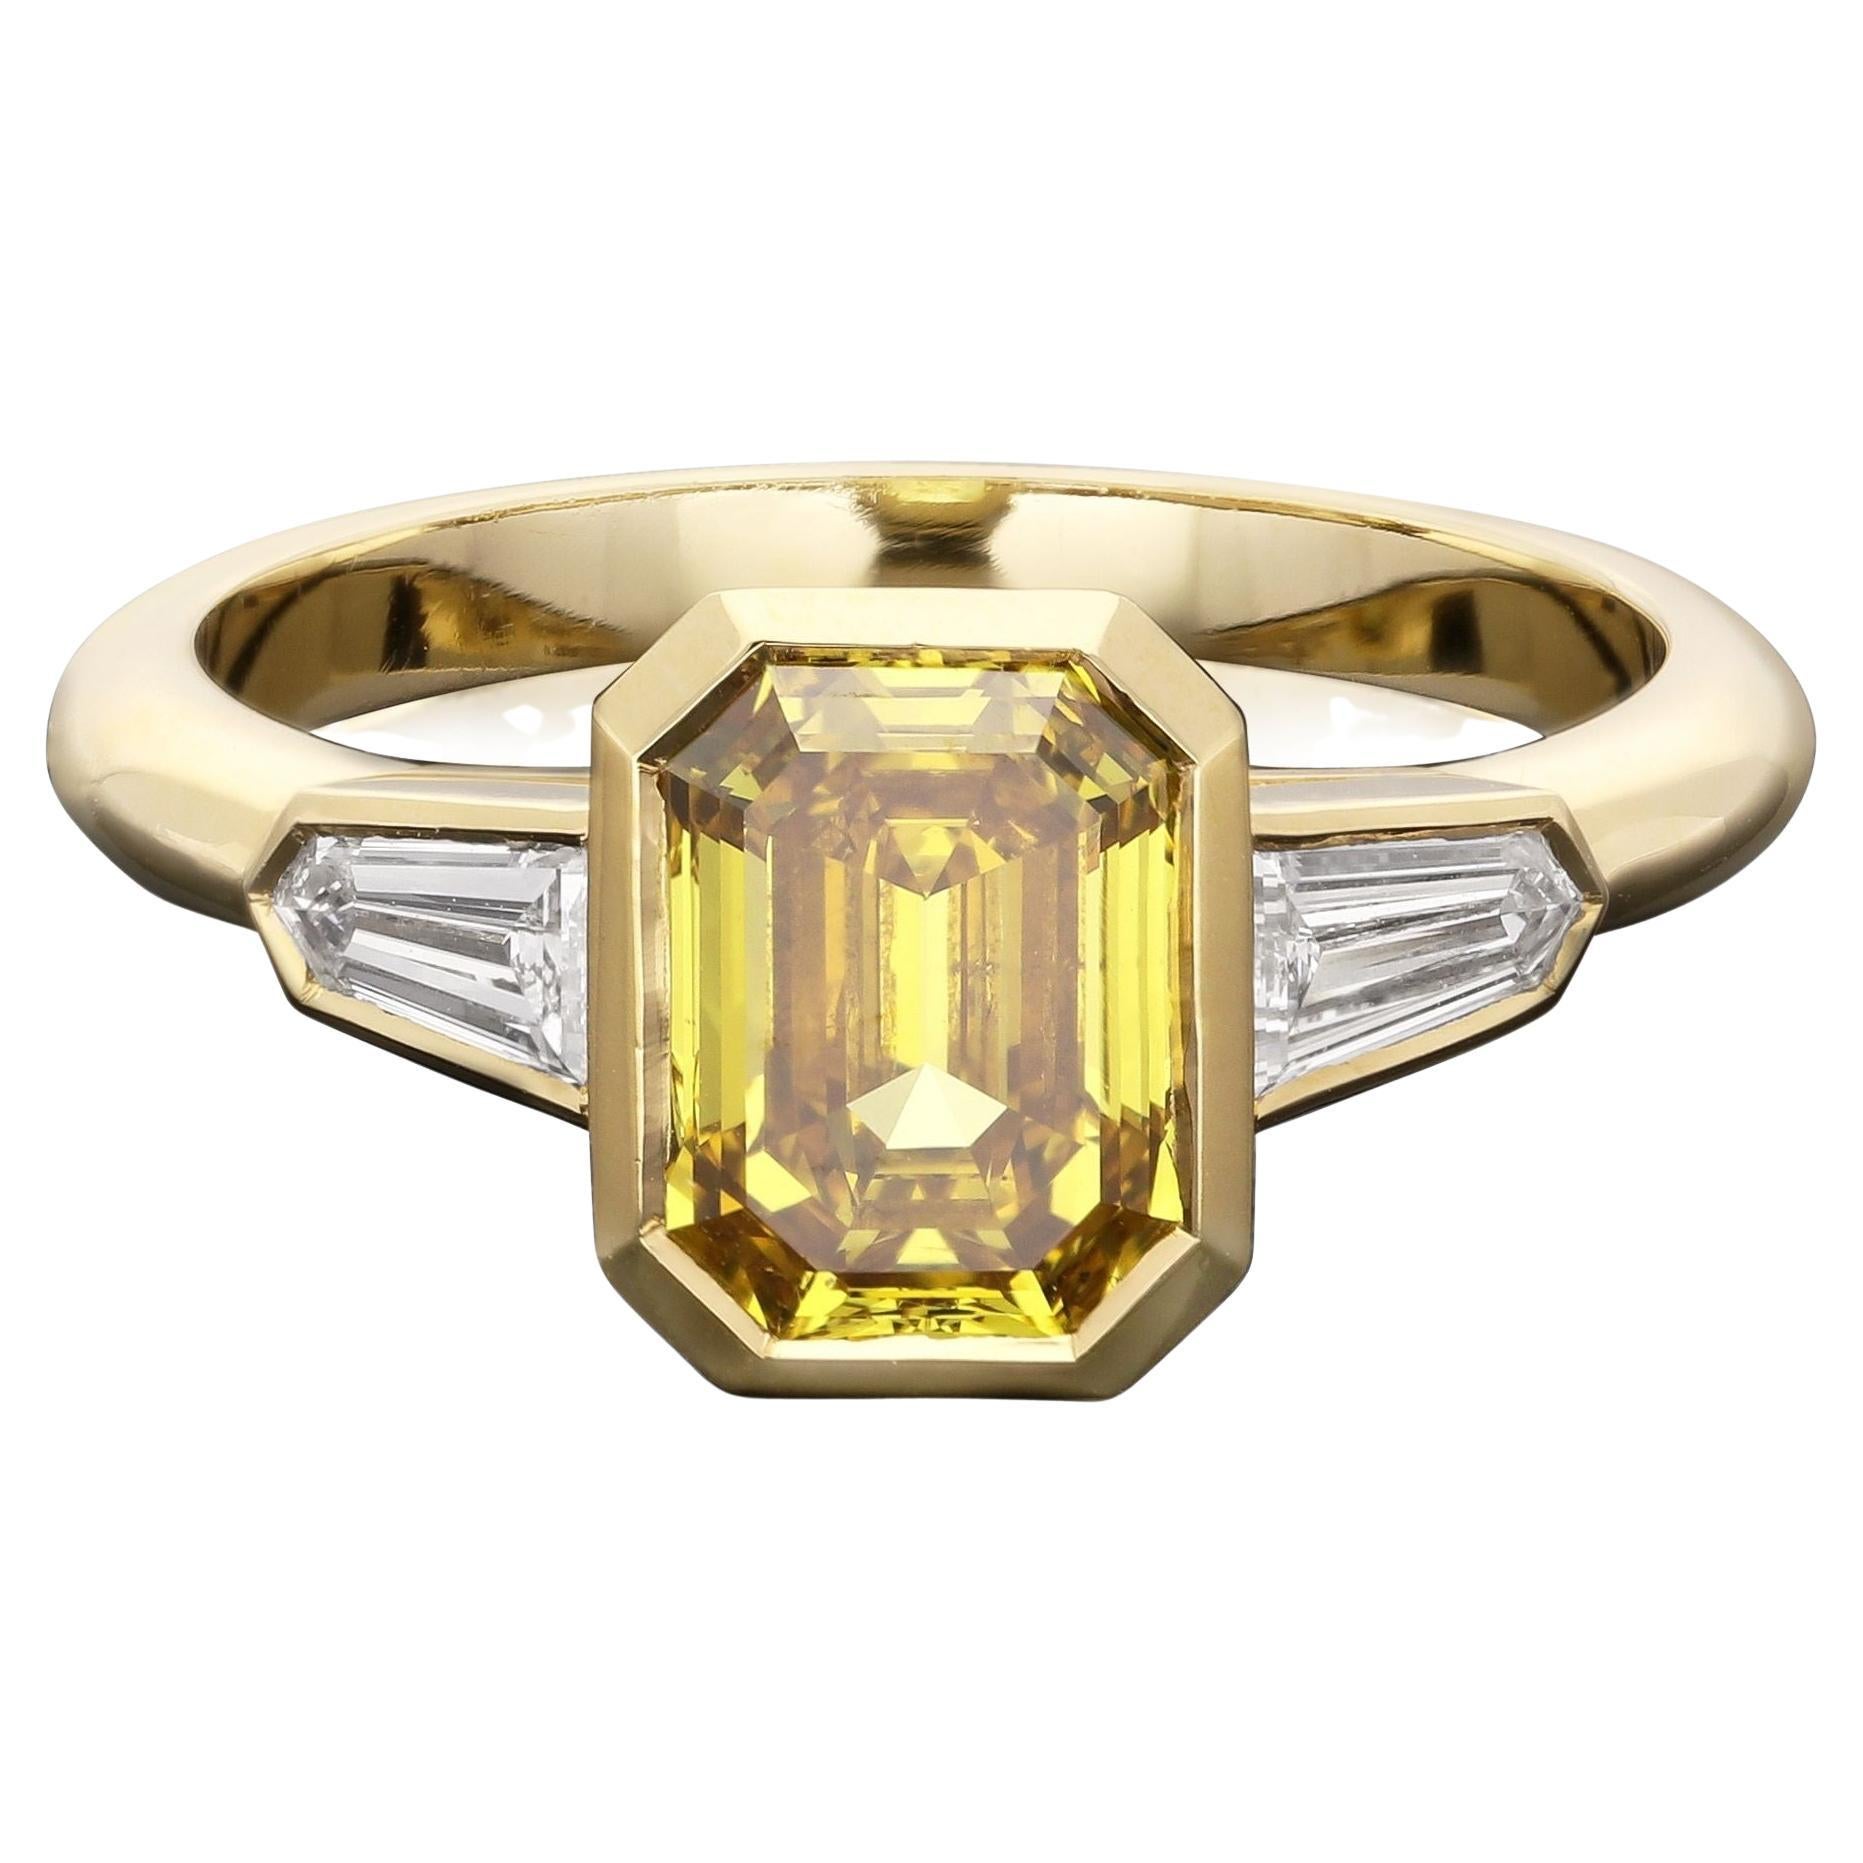 Hancocks 1.52ct Fancy Deep Yellow Diamond Ring with White Diamond Shoulders